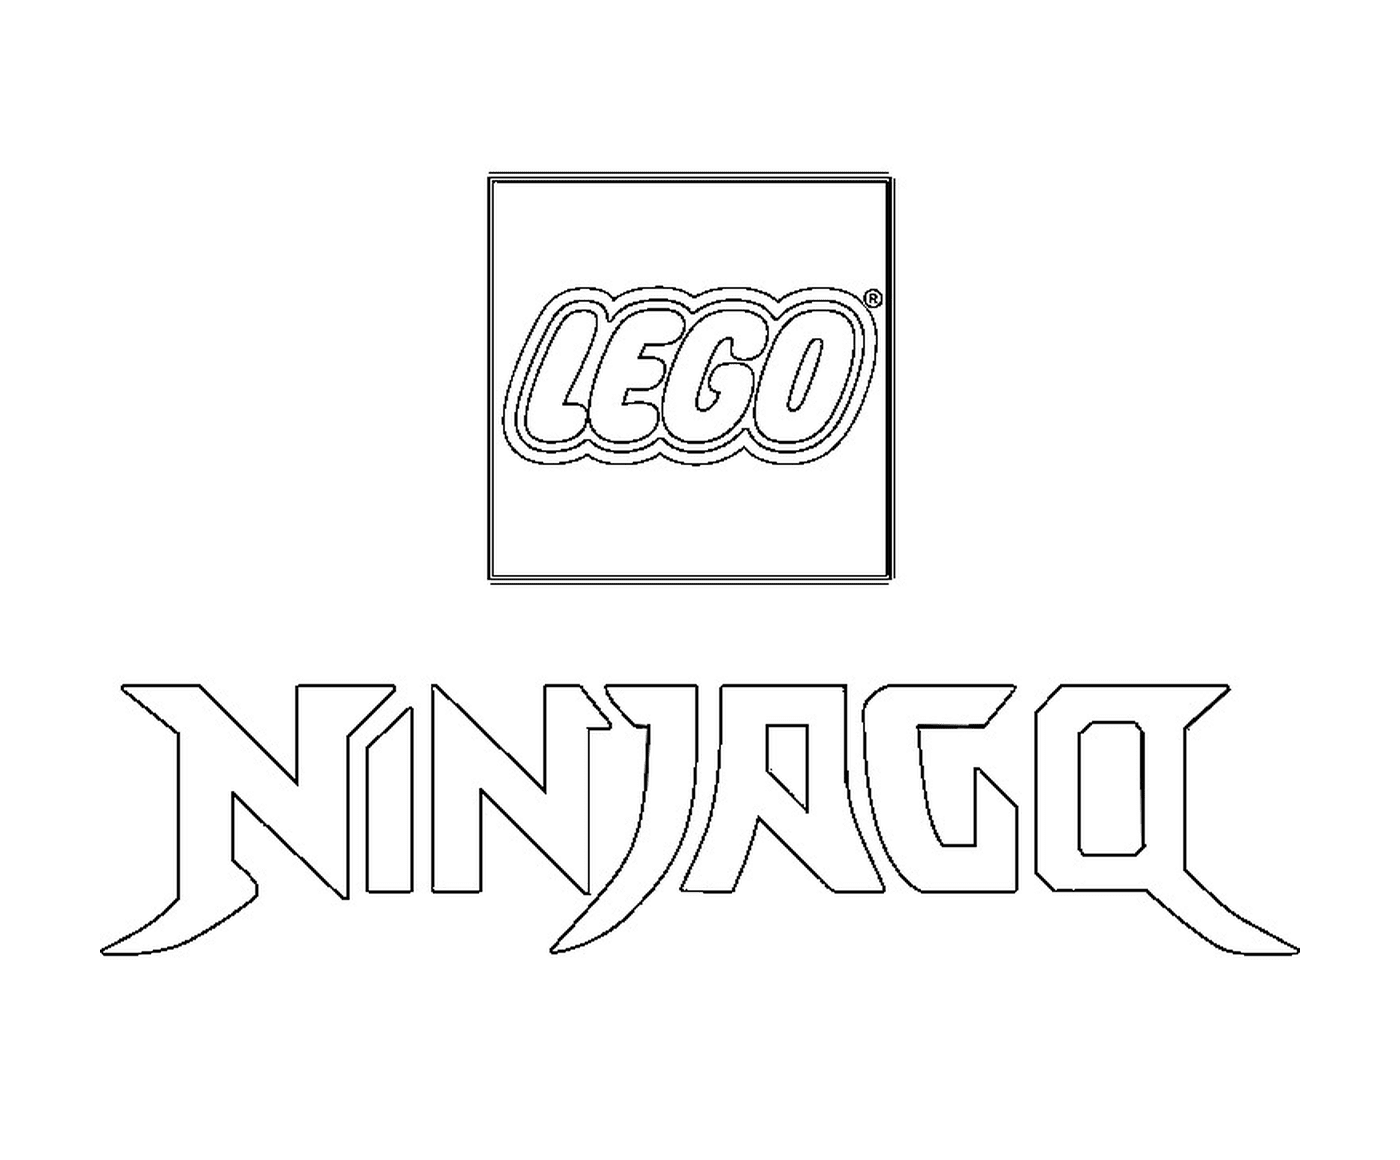  Logotipo Ninjago 